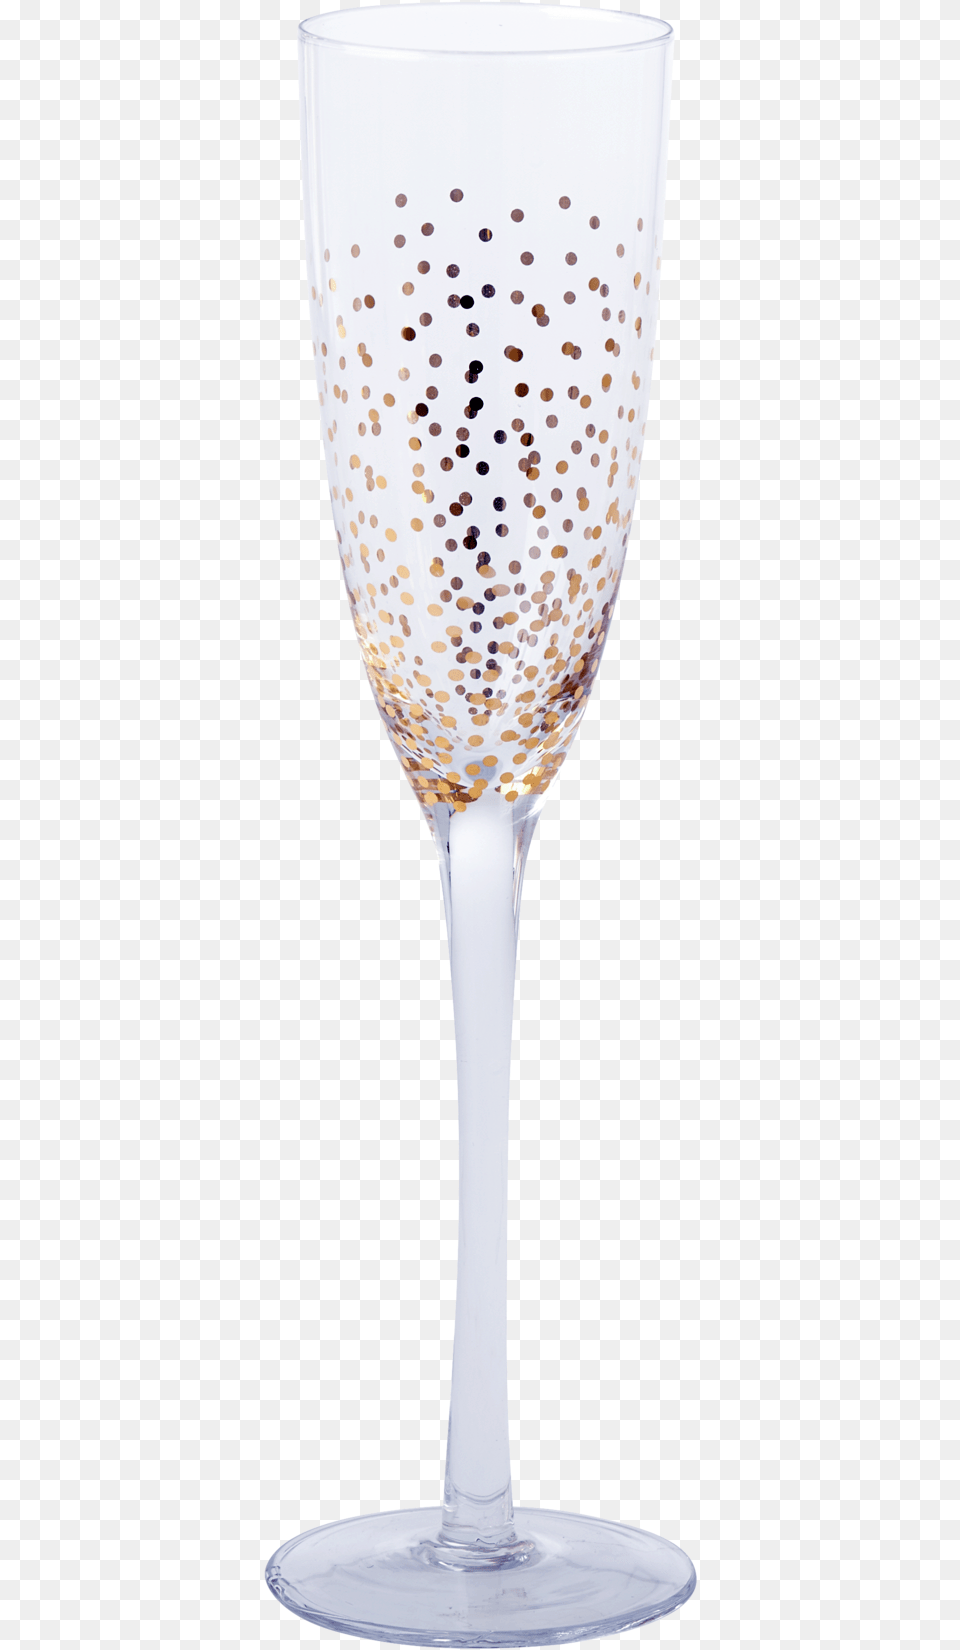 Gold Dot Champagne Glas Rice Glasse Amp Carafe Gldot Champ Yellow Golden, Alcohol, Beverage, Glass, Goblet Png Image